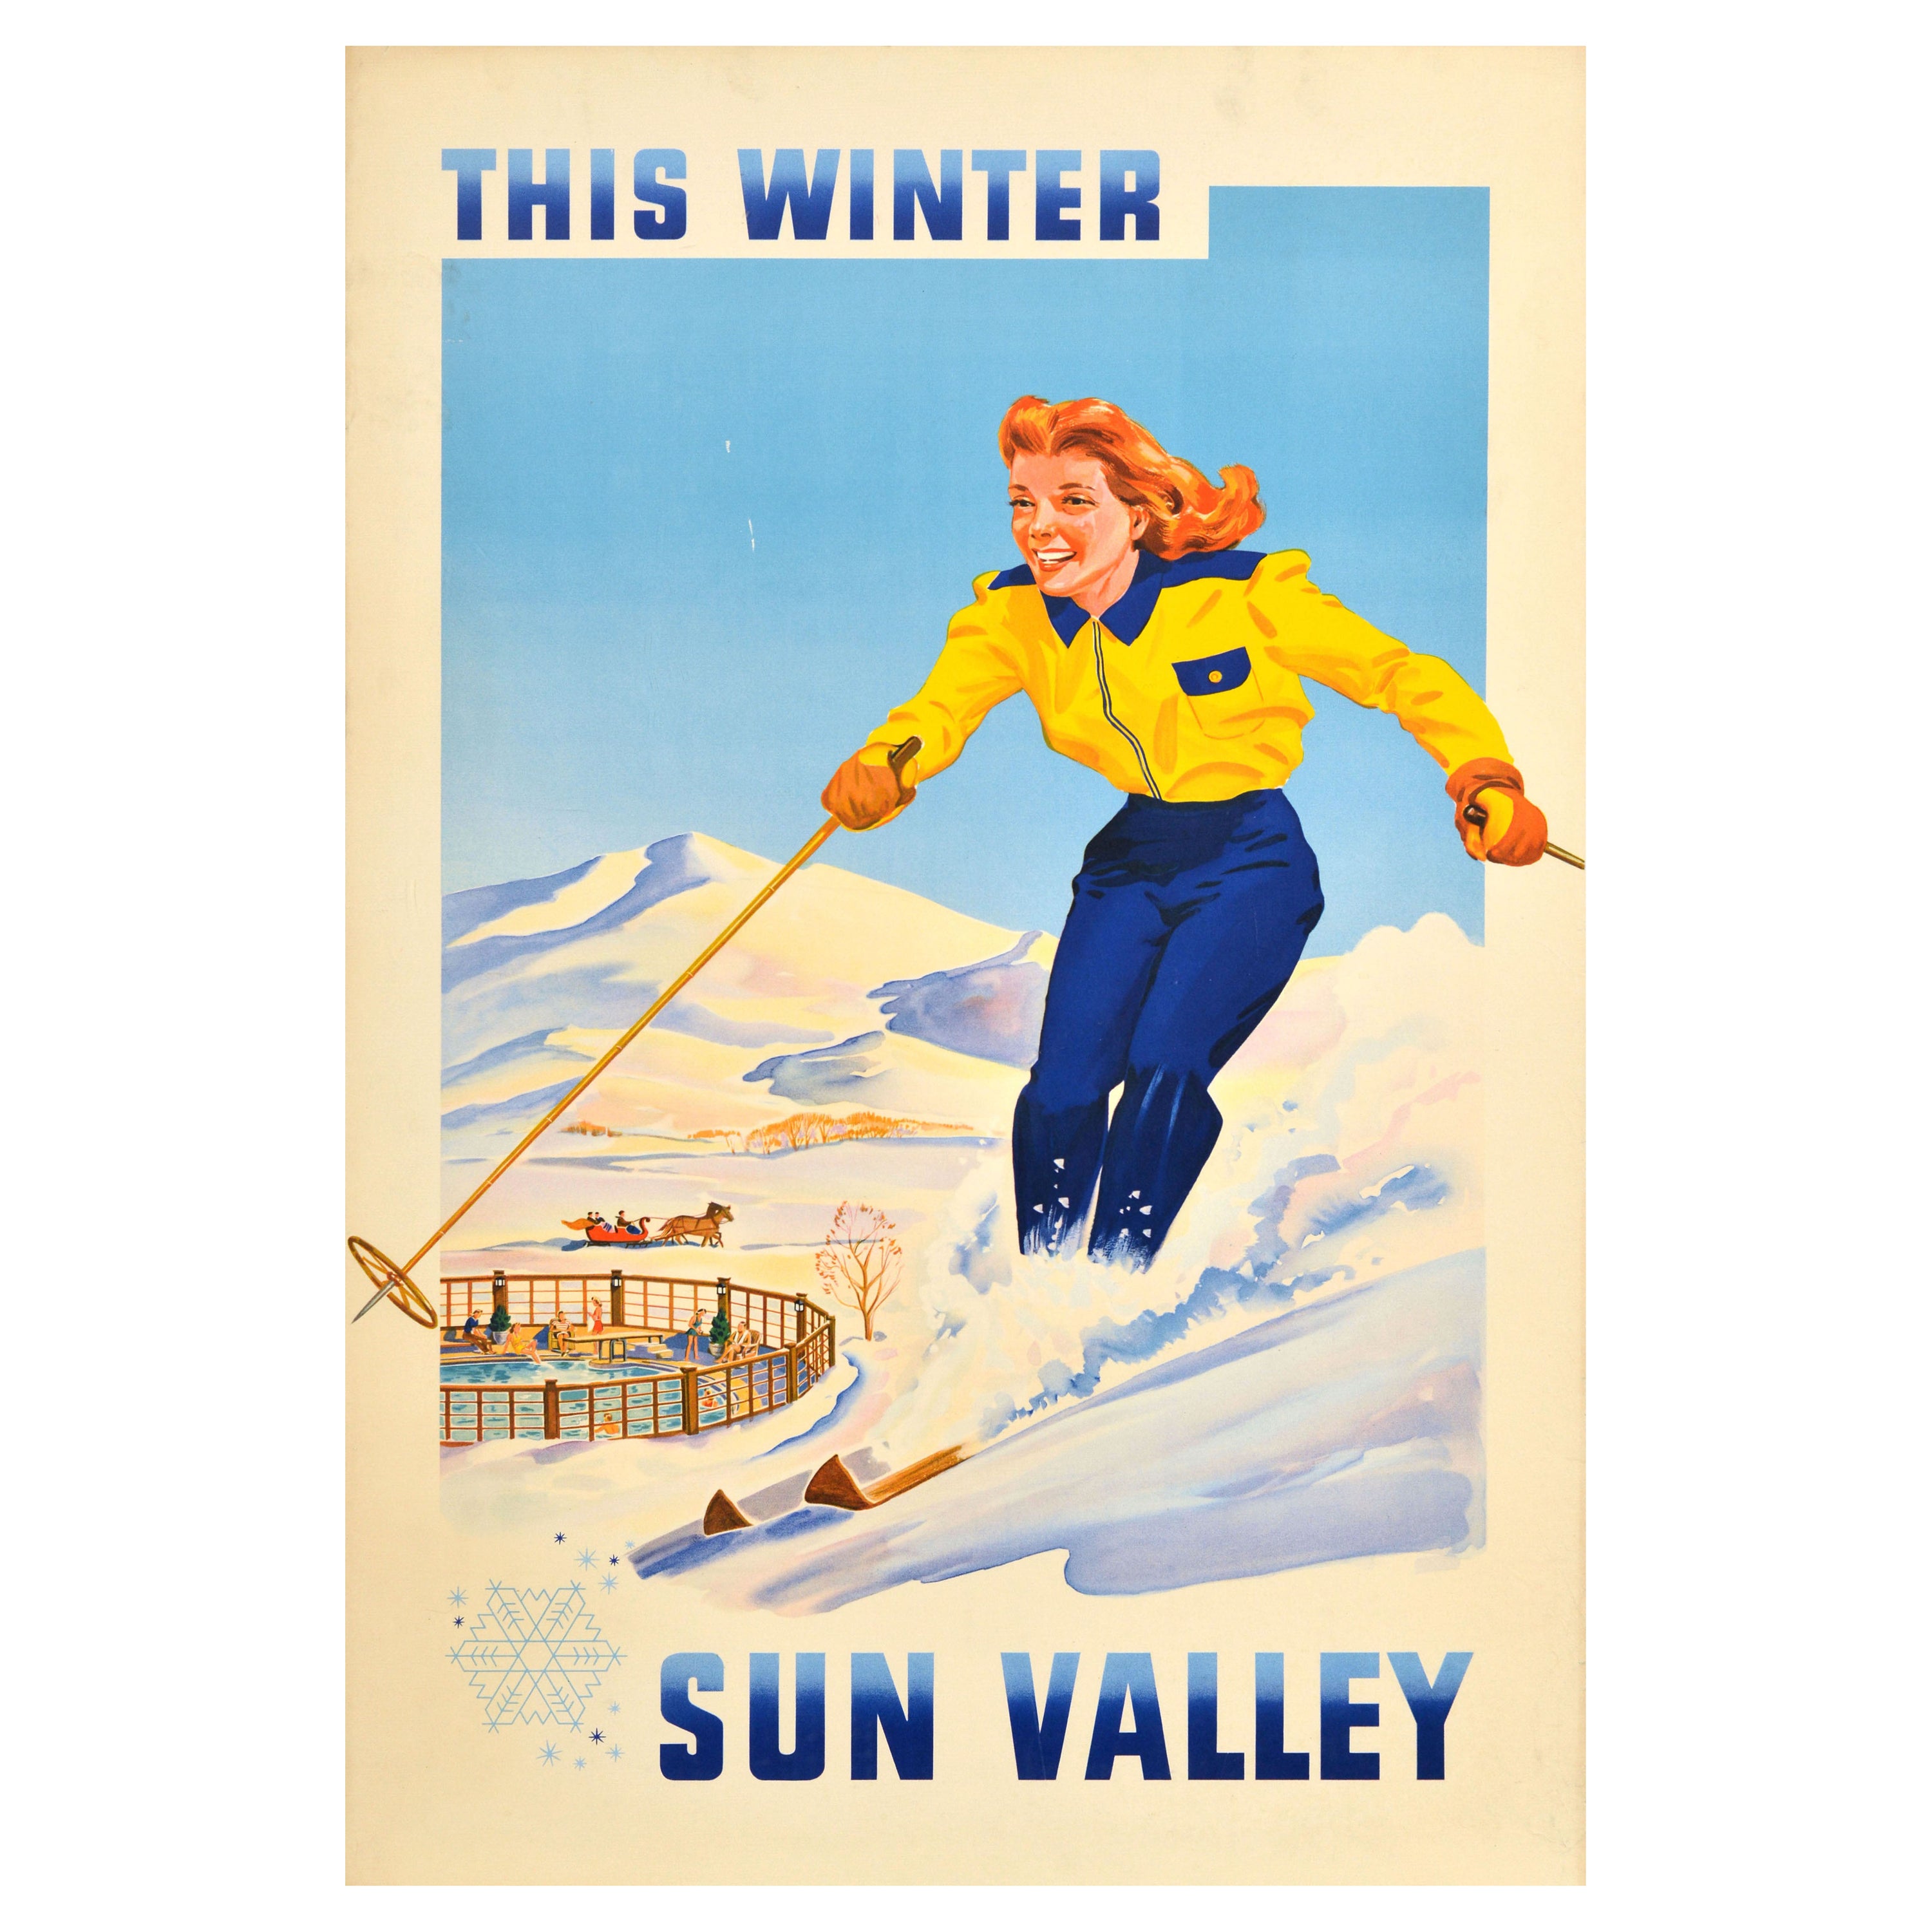 Original Vintage Winter Ski Sports Travel Poster This Winter Sun Valley Idaho For Sale